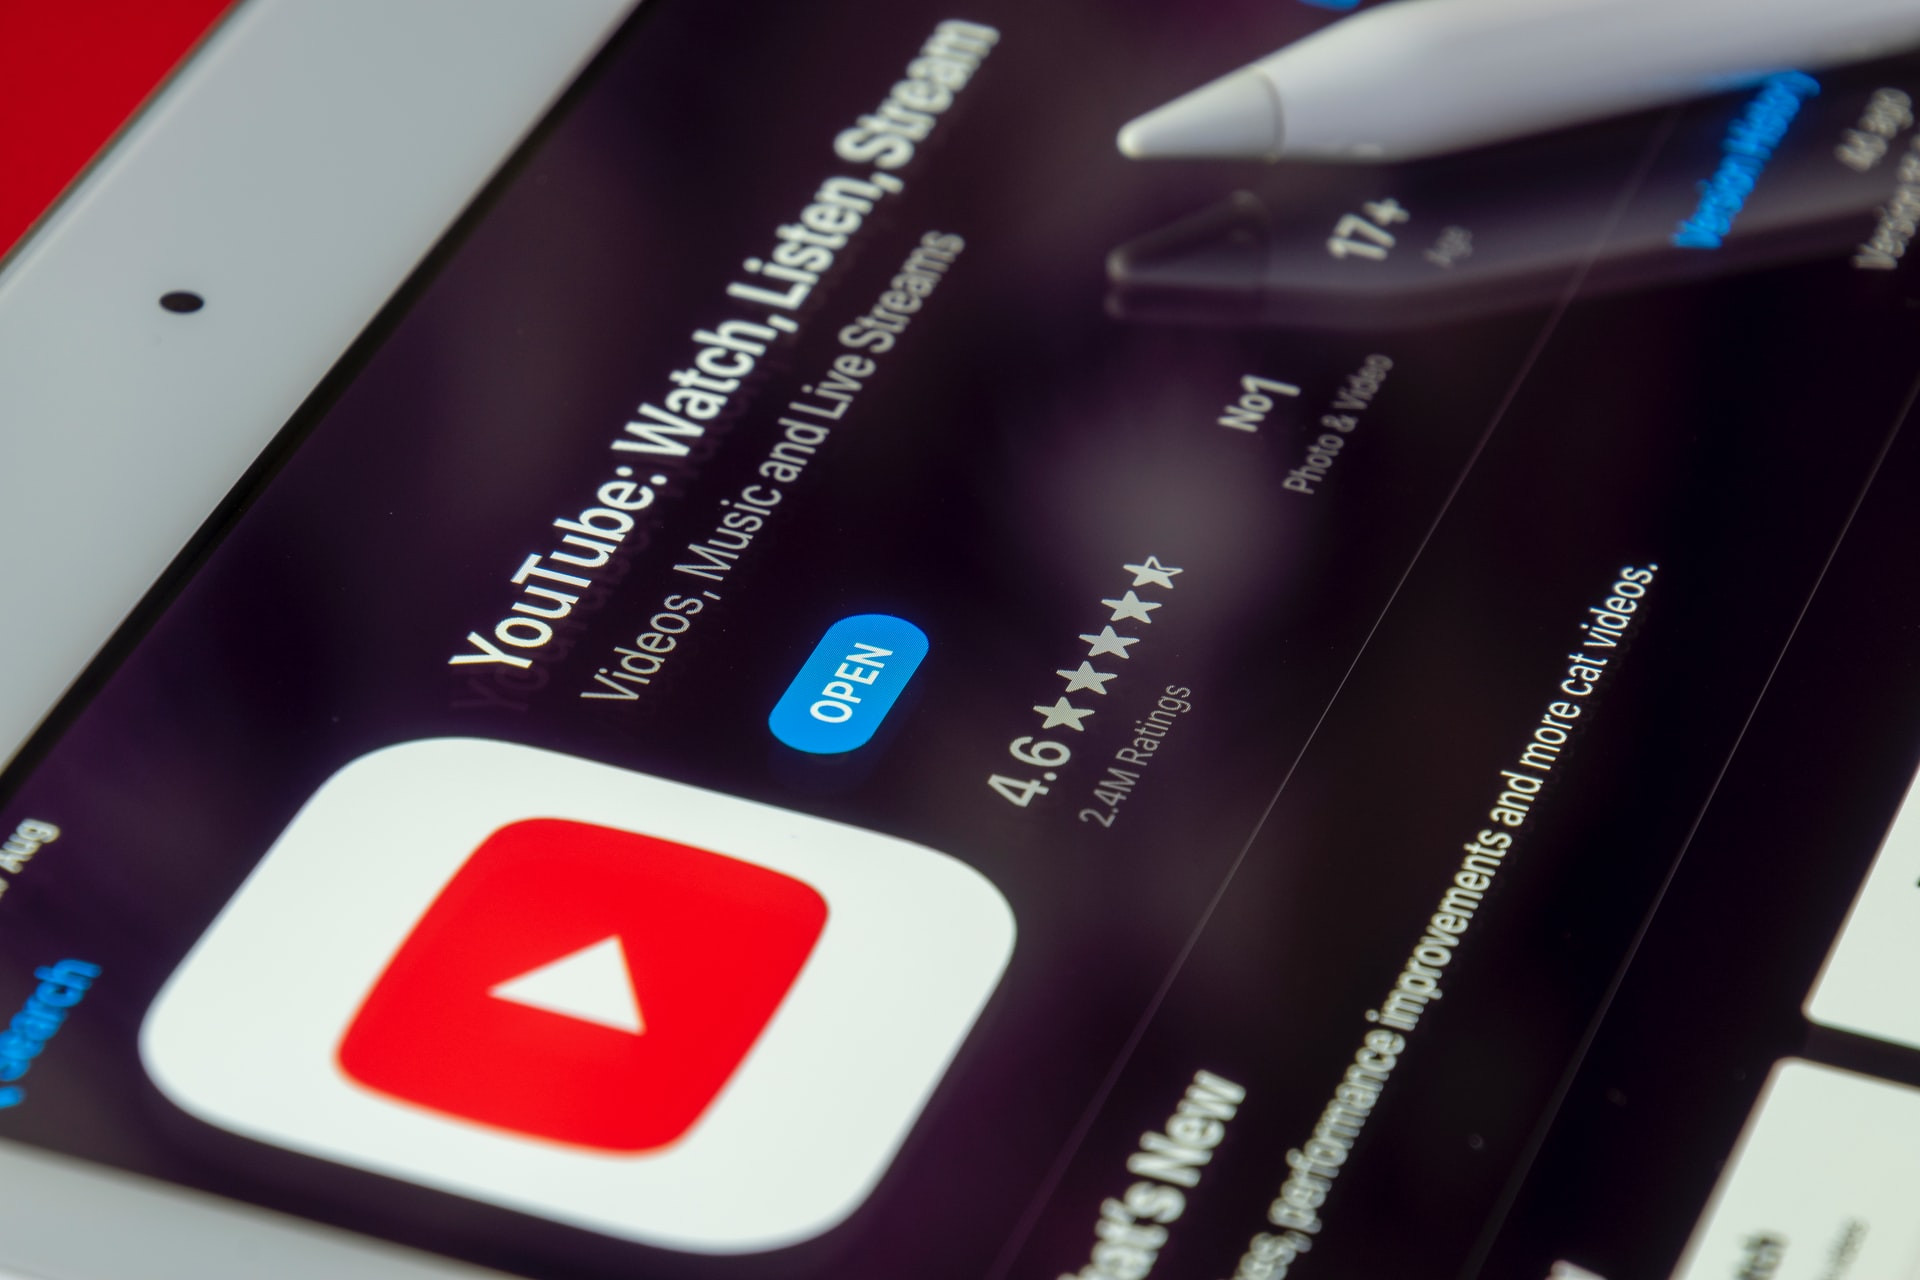 Cara atau strategi untuk meningkatkan penonton video marketing kamu di YouTube